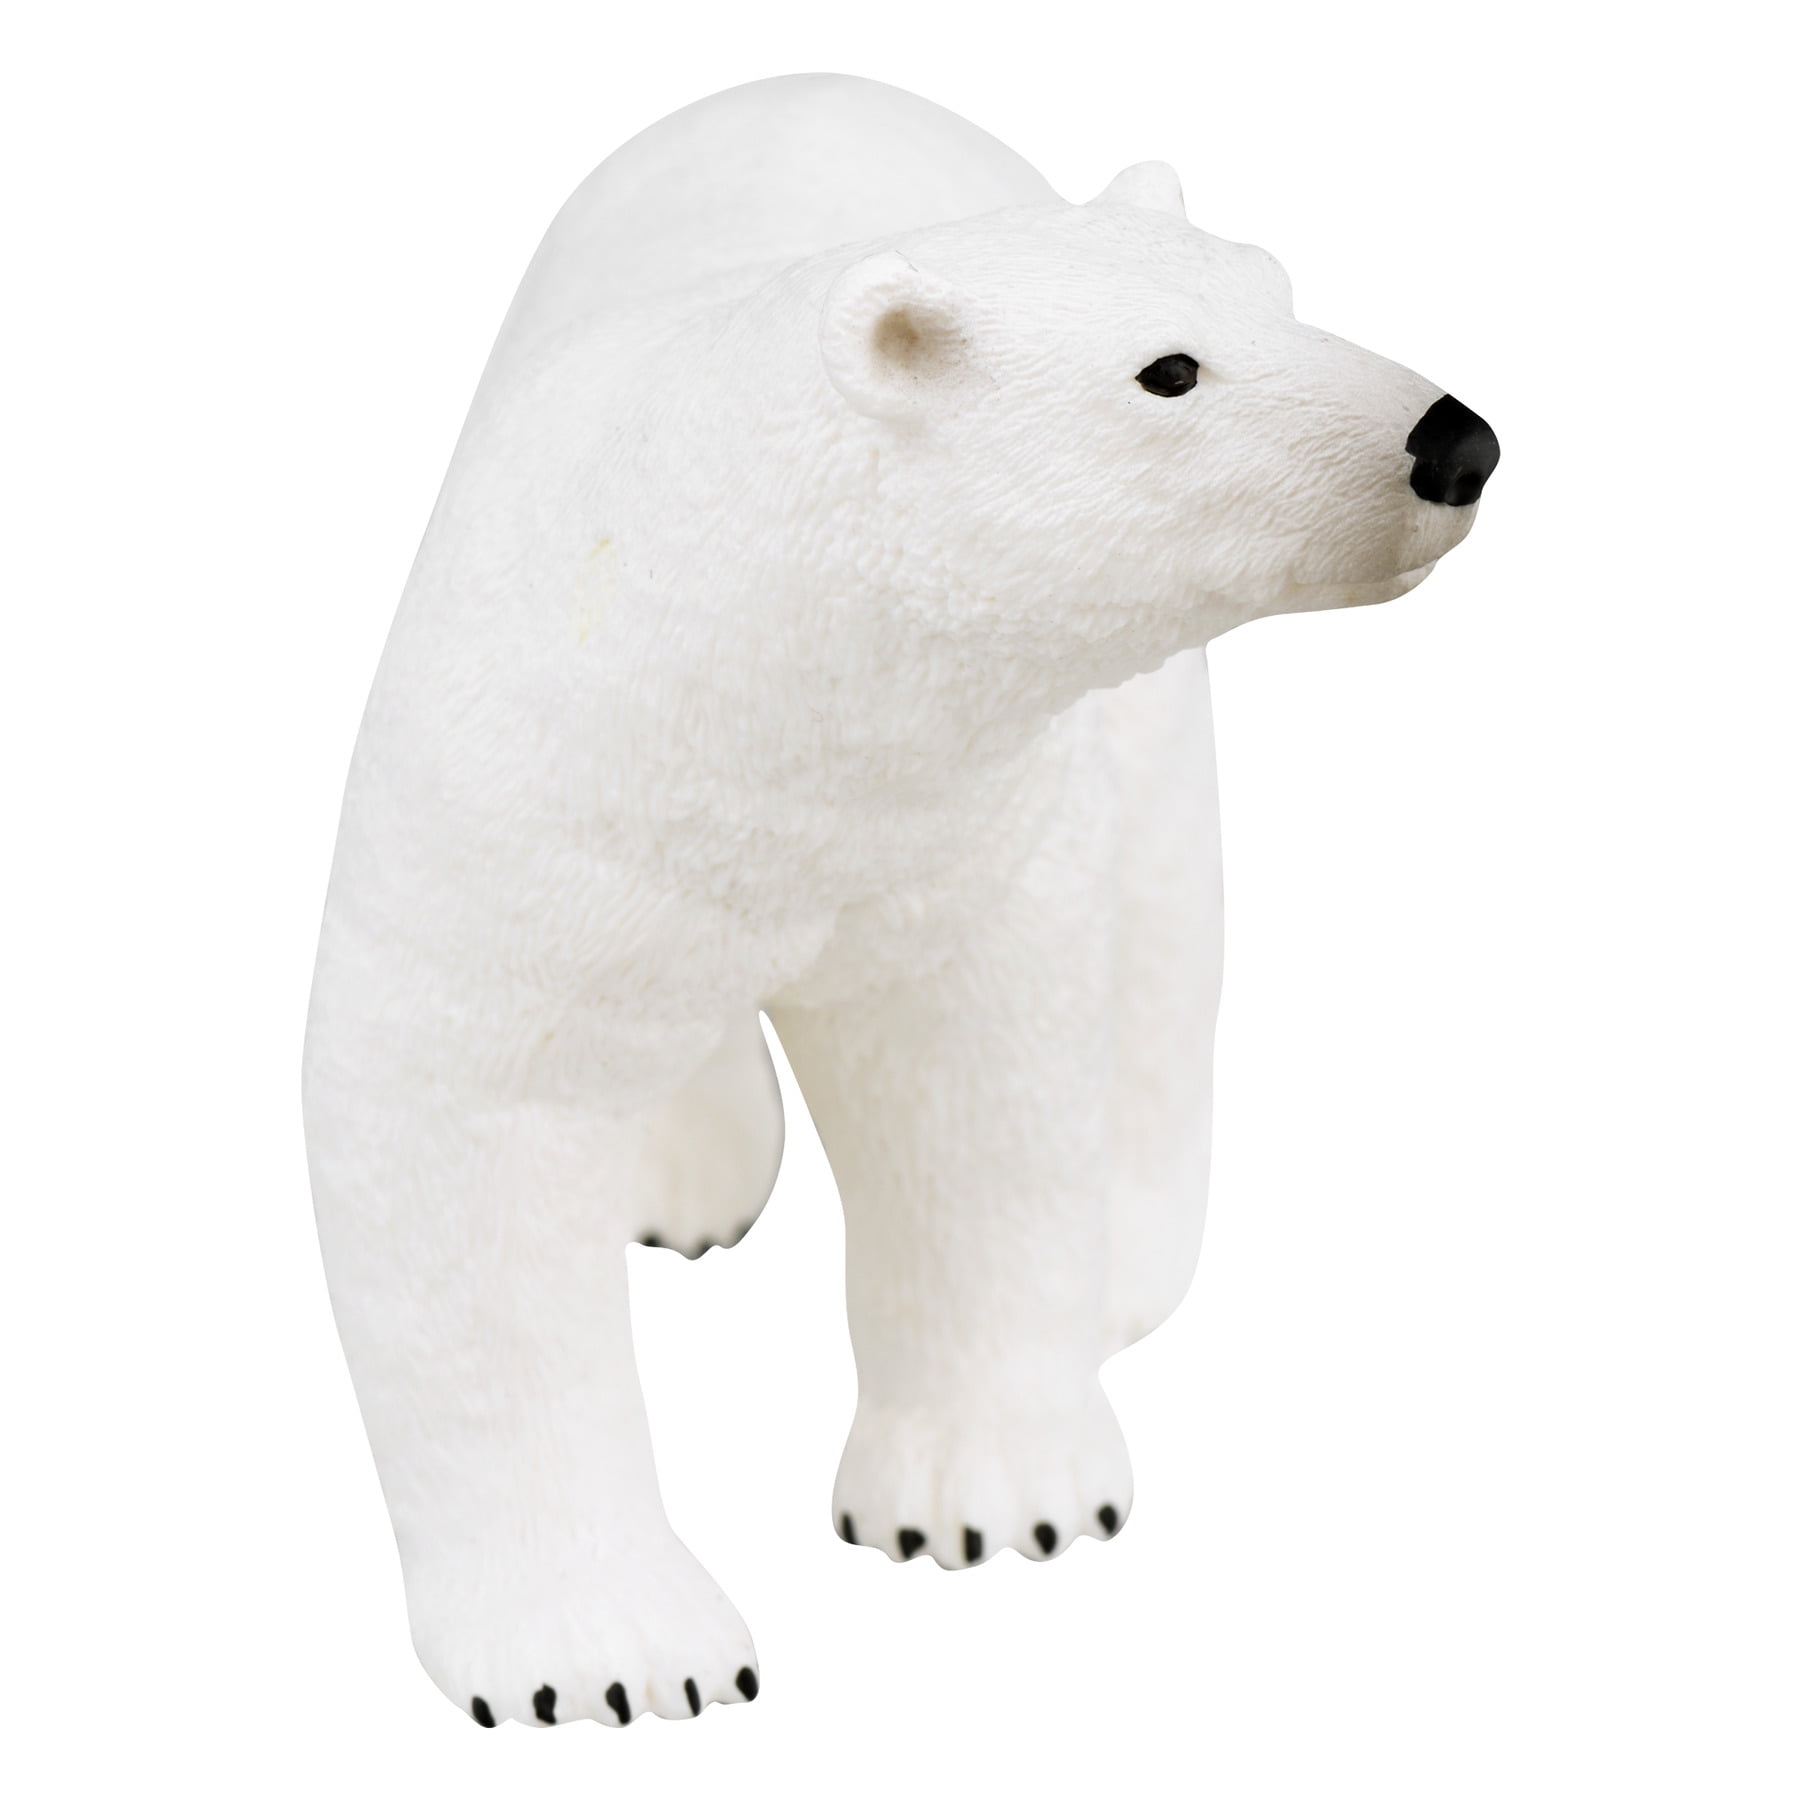 Schleich Polar Bear Animal Figure NEW IN STOCK Educational 